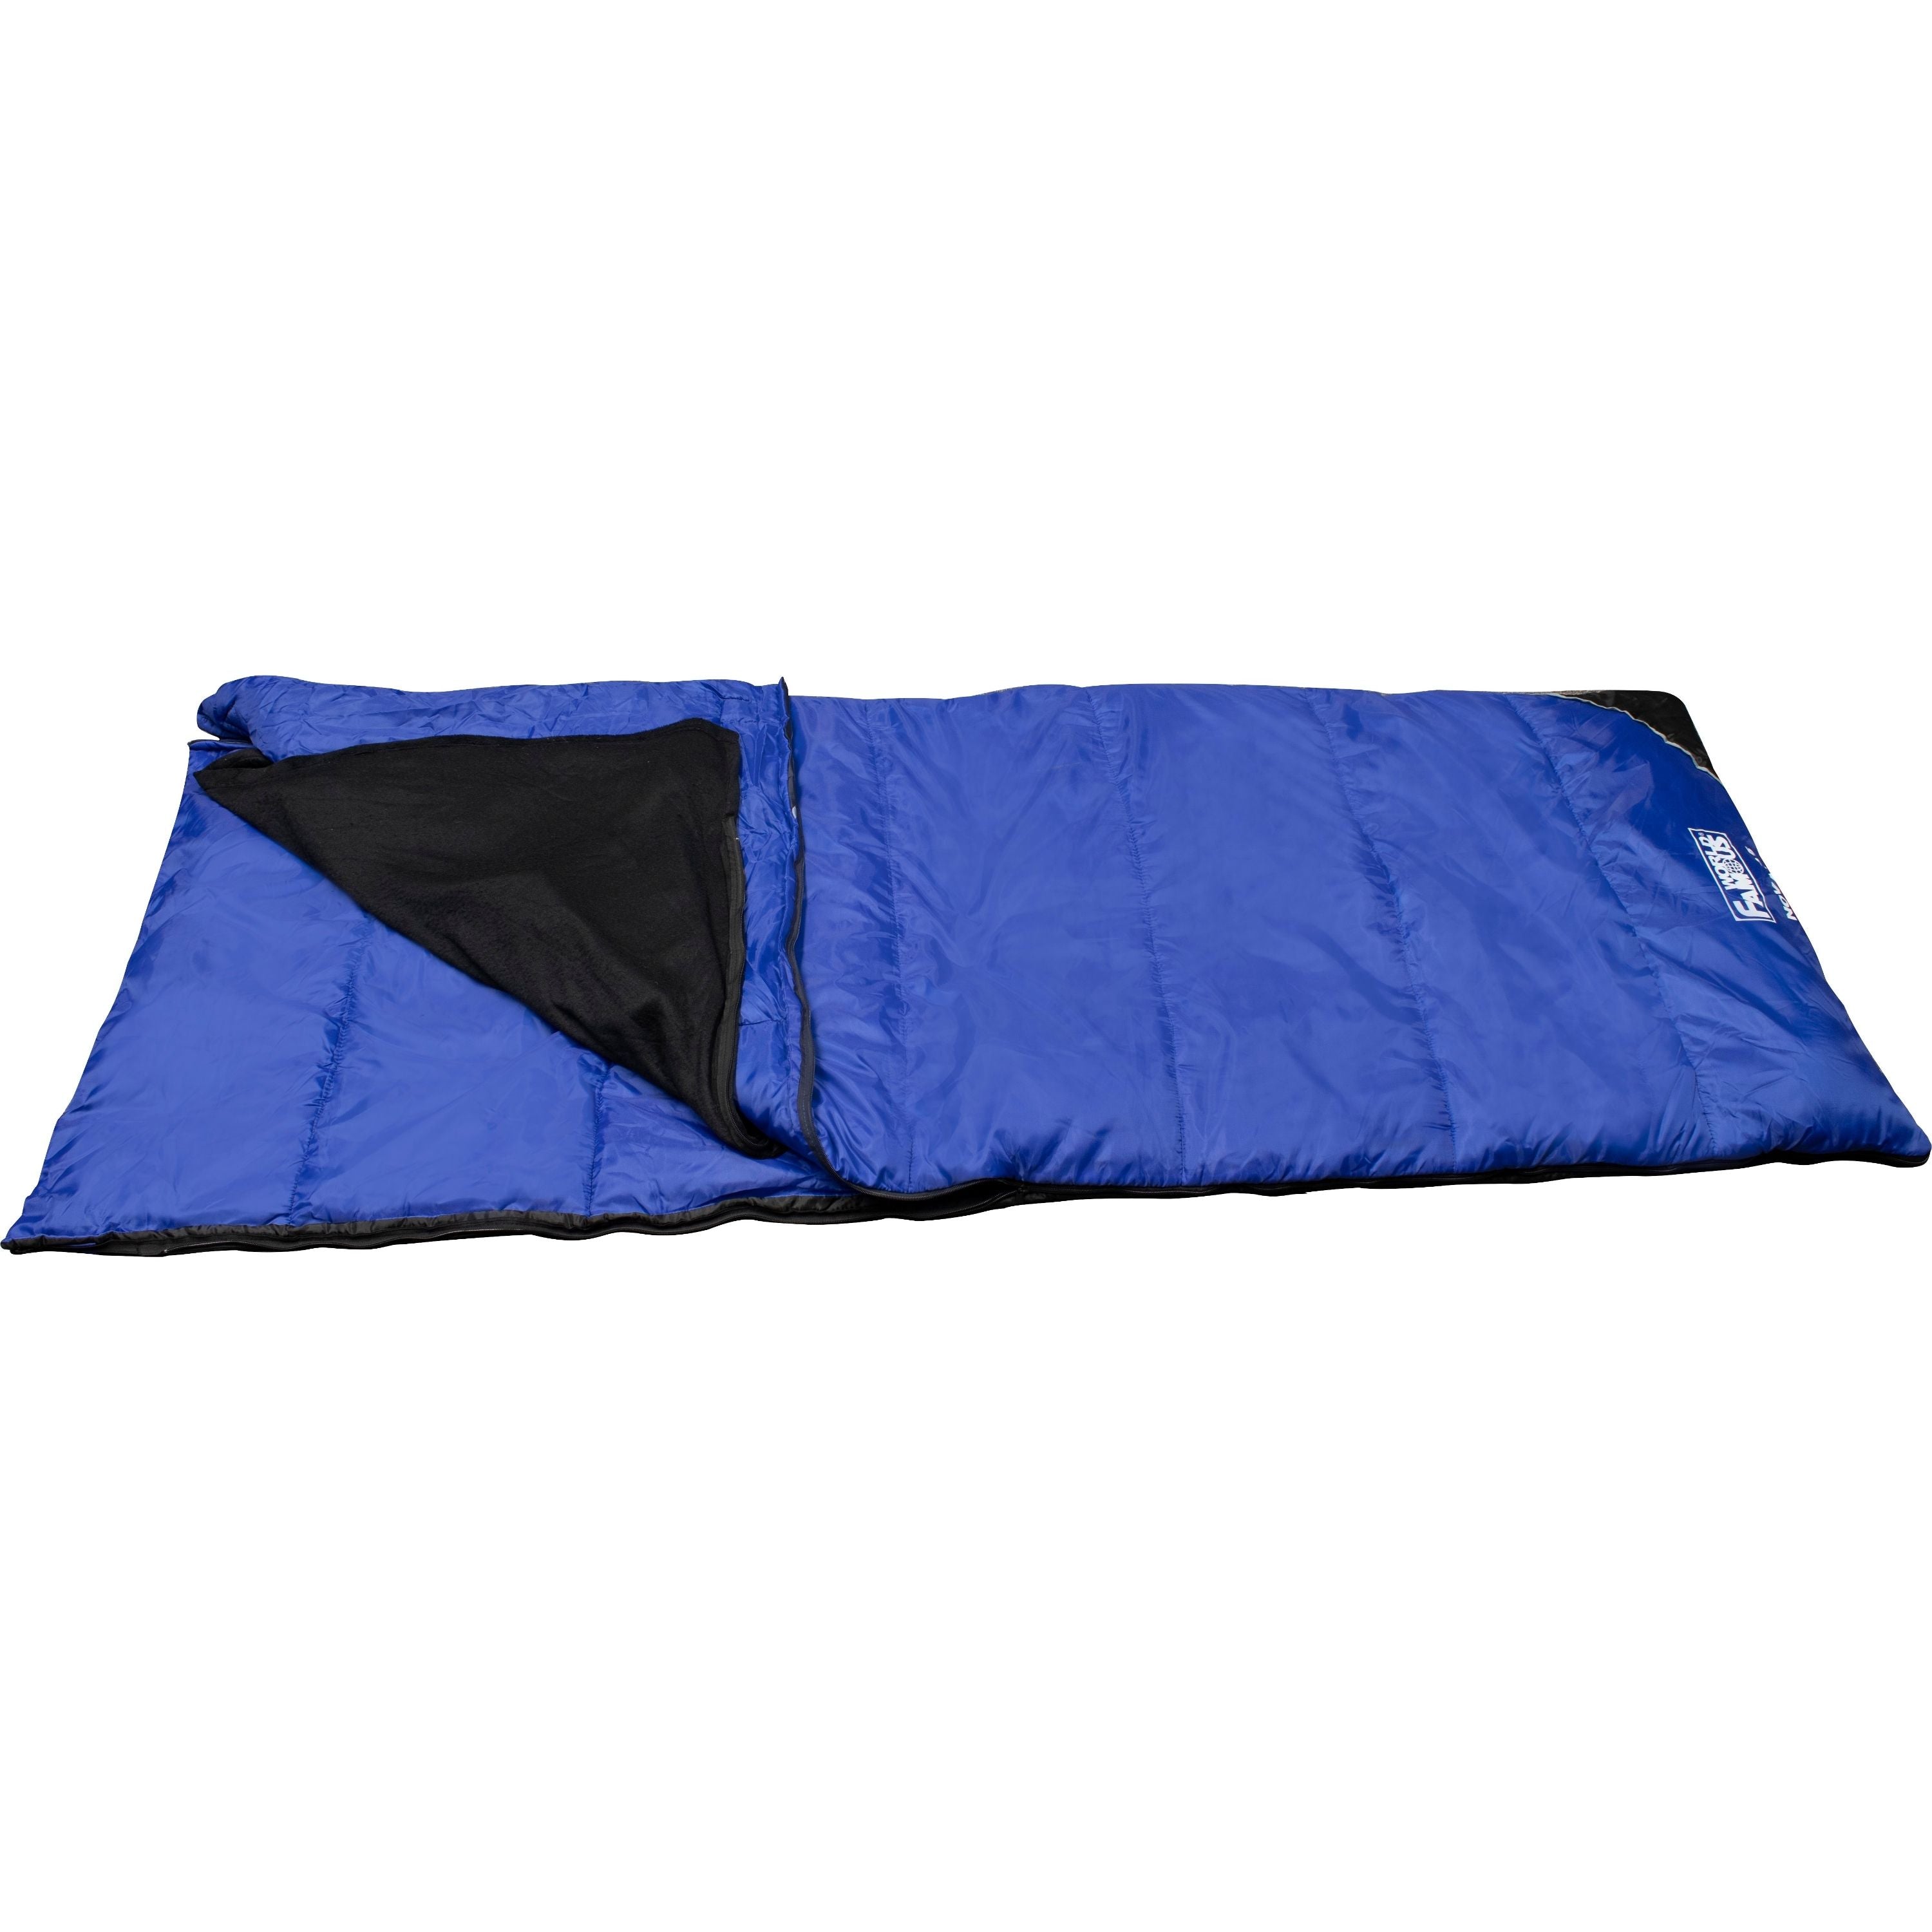 "Nova 3.5" Sleeping bag removable blanket